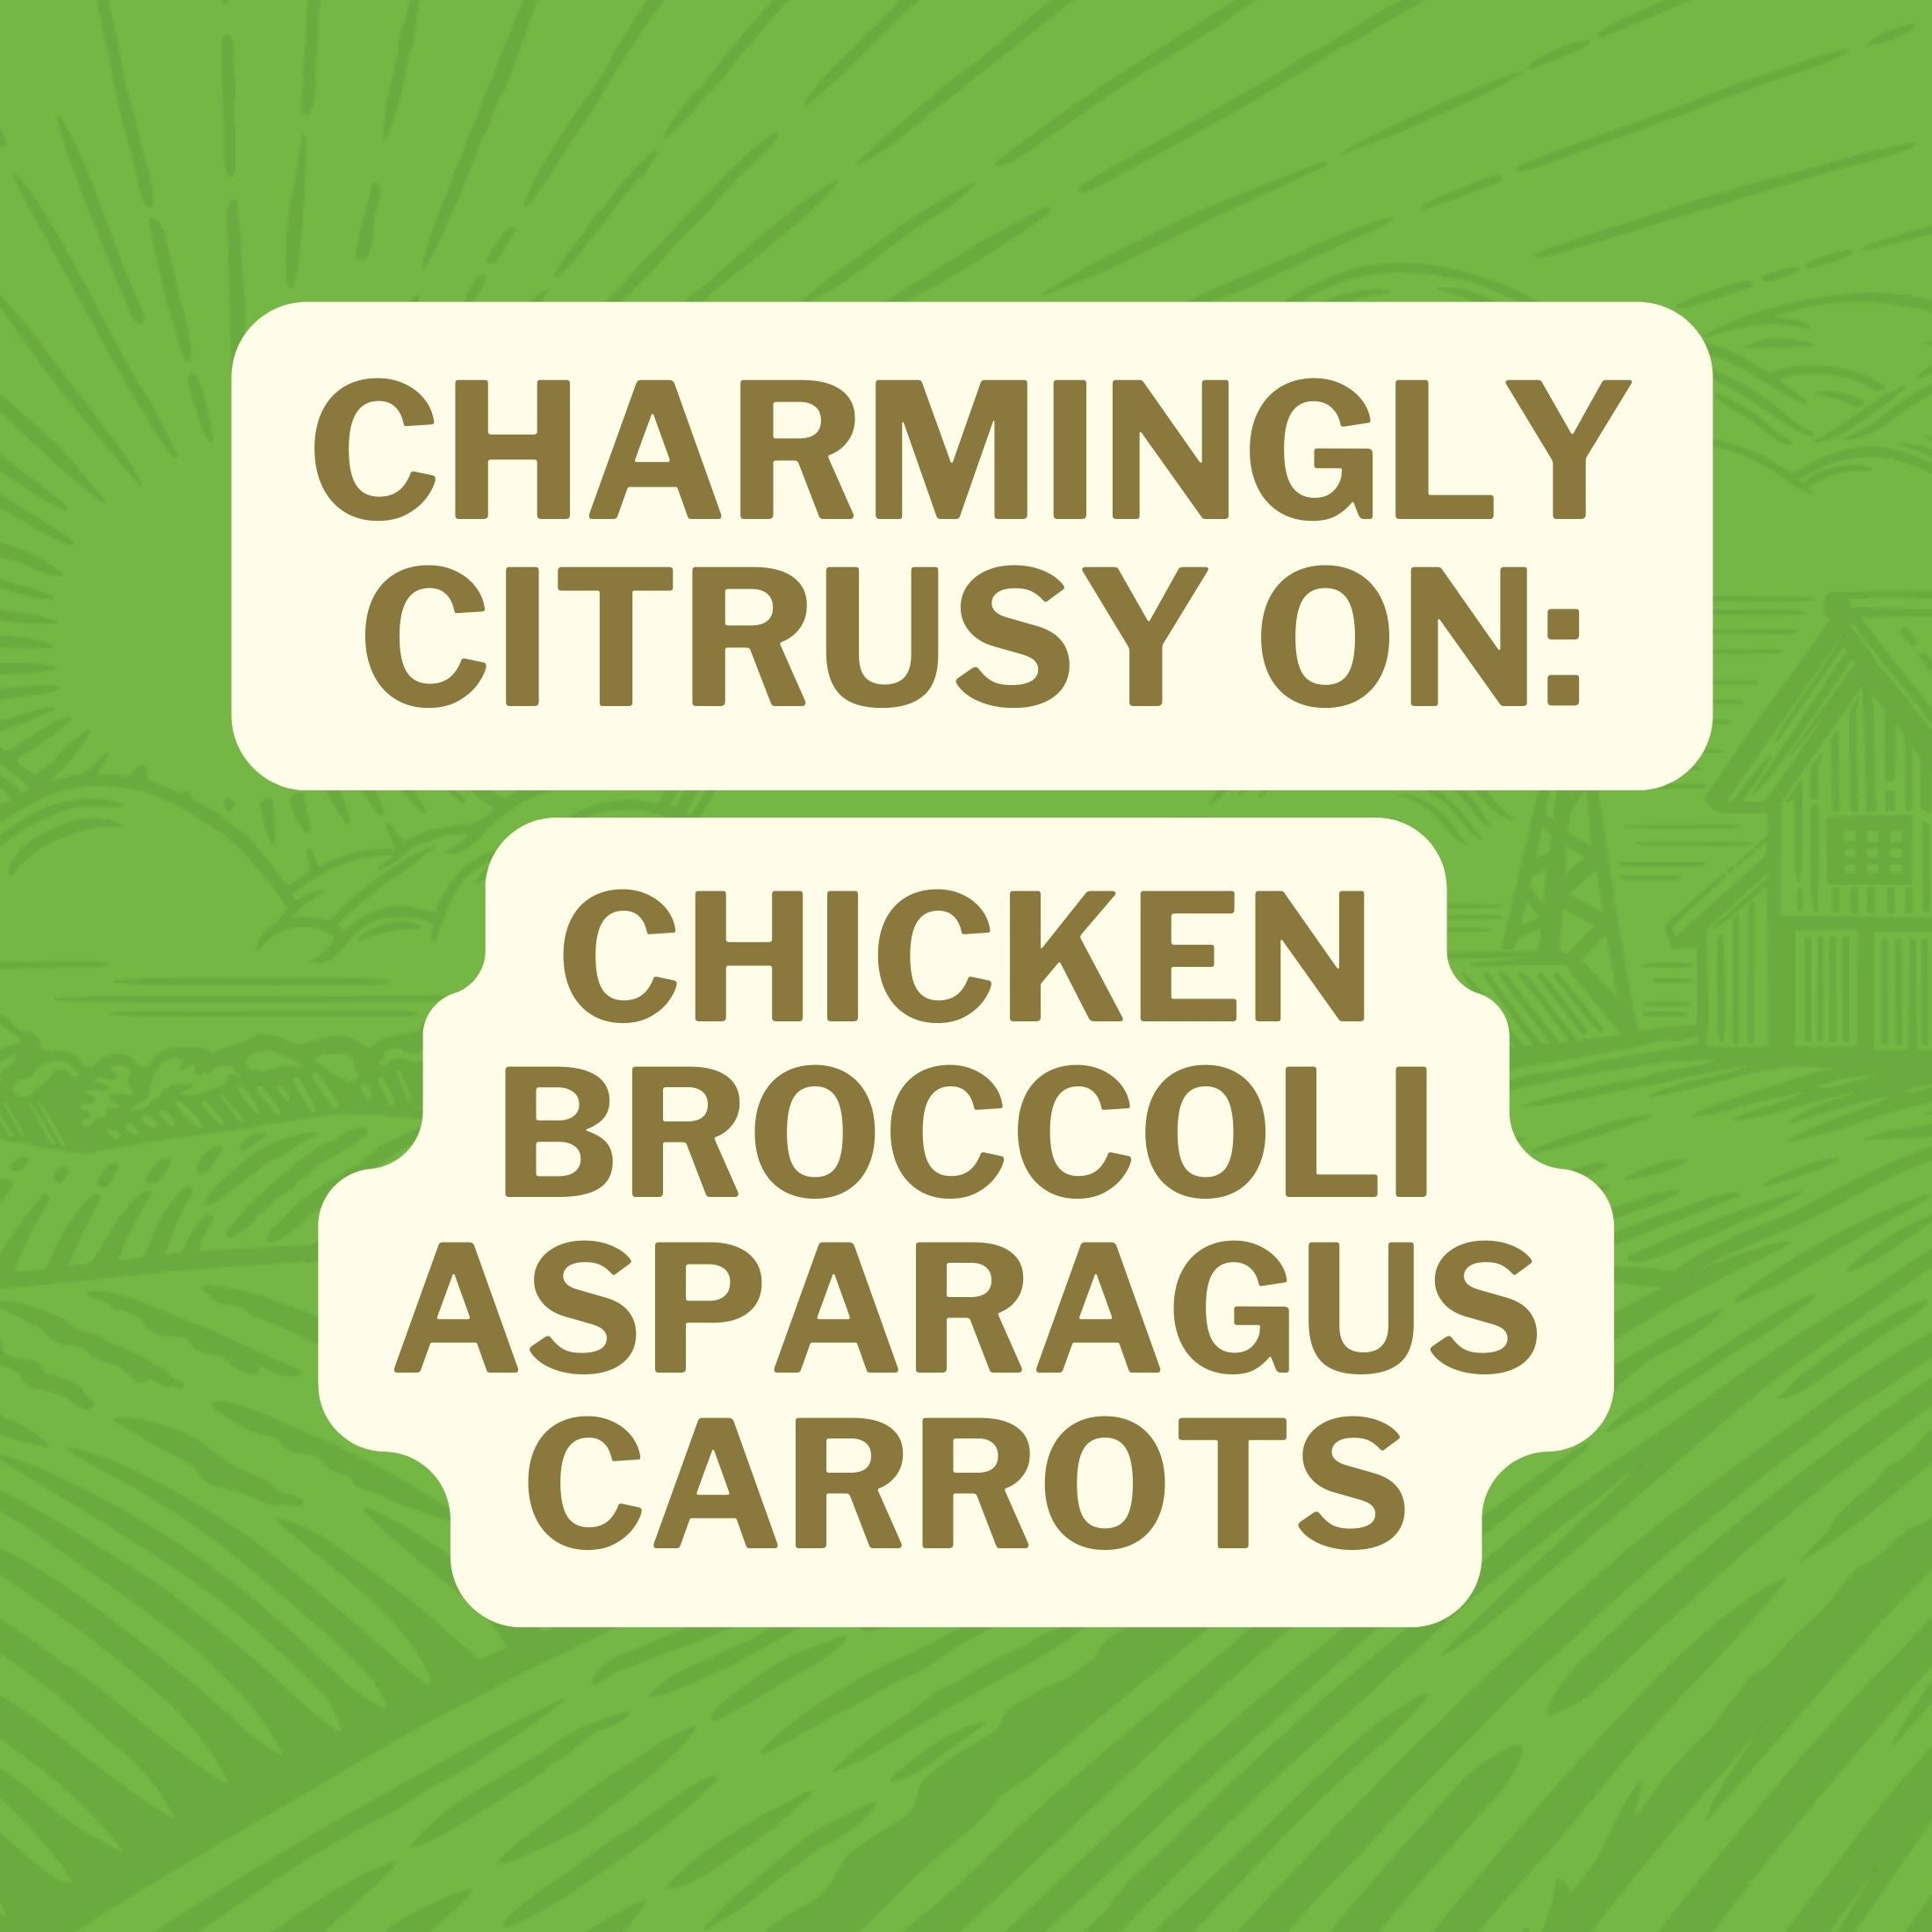 Charmingly Citrusy On: Chicken Broccoli Aparagus Carrots